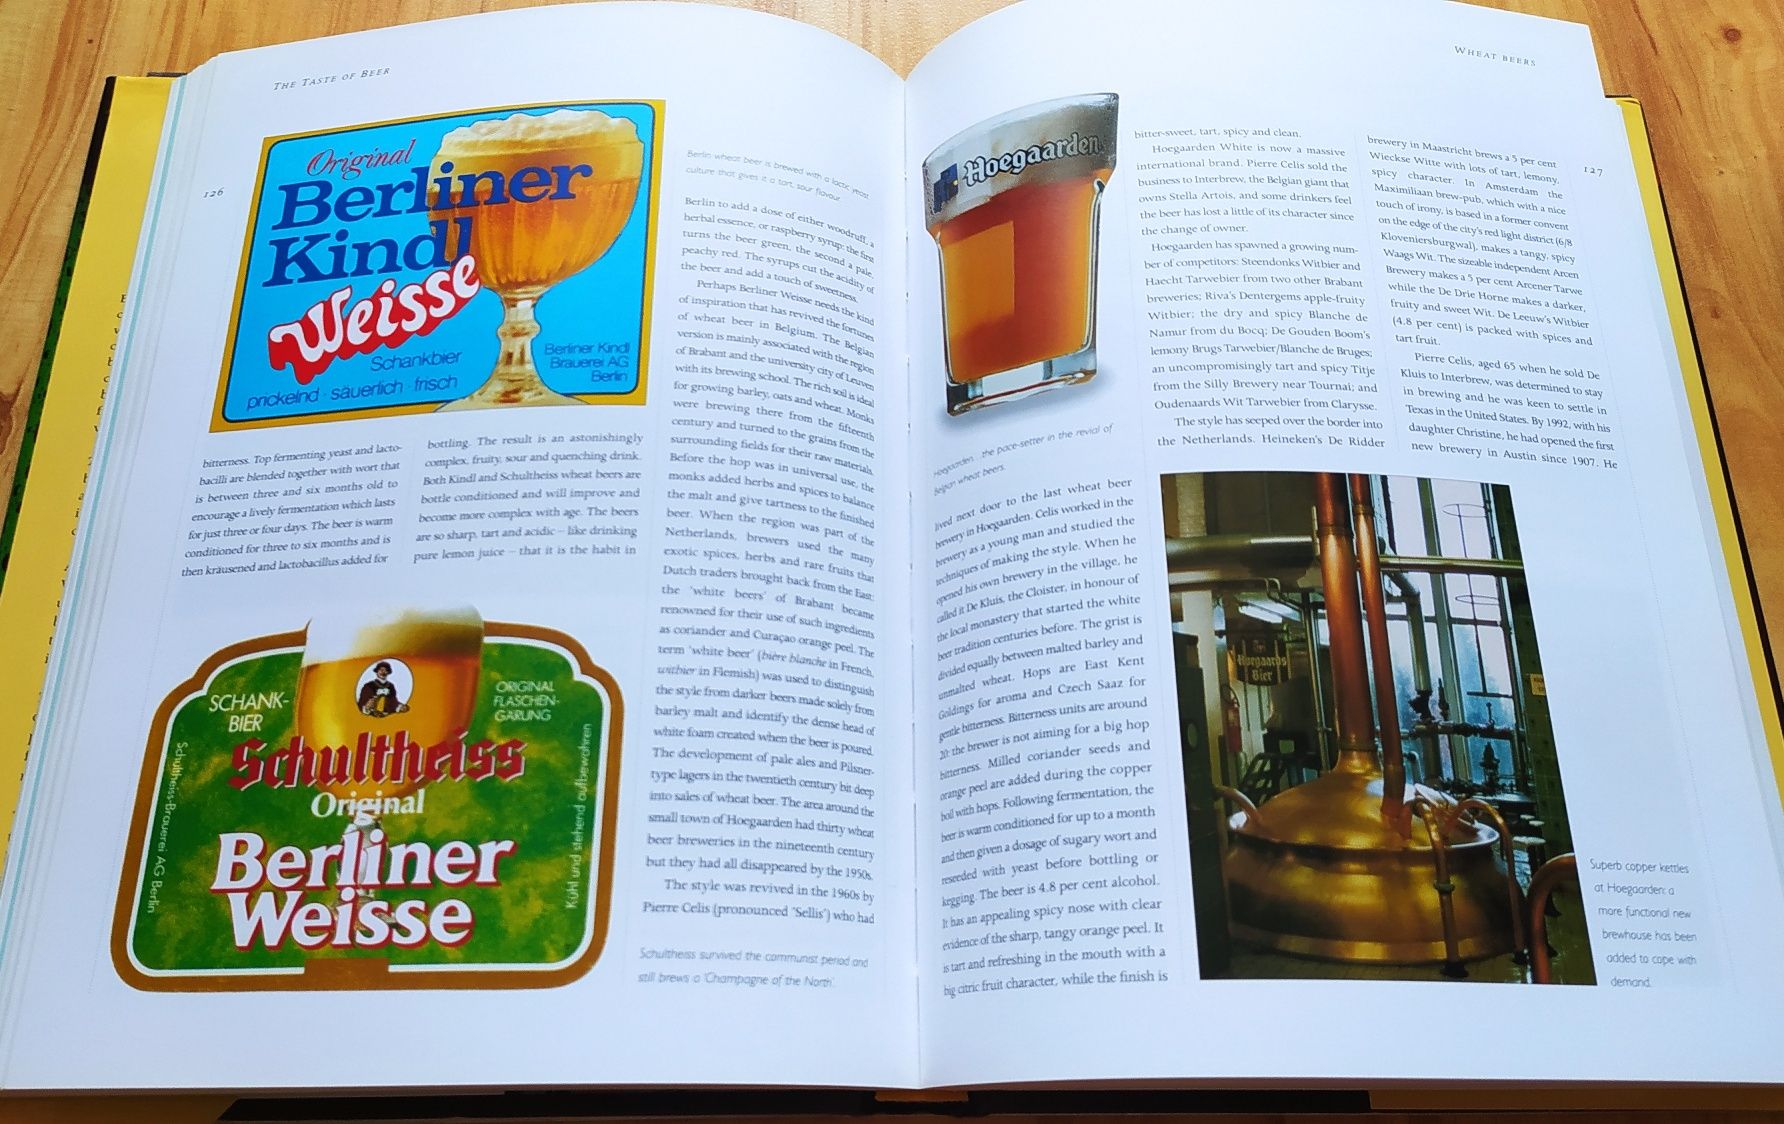 The Taste of Beer Roger Protz album przewodnik piwo